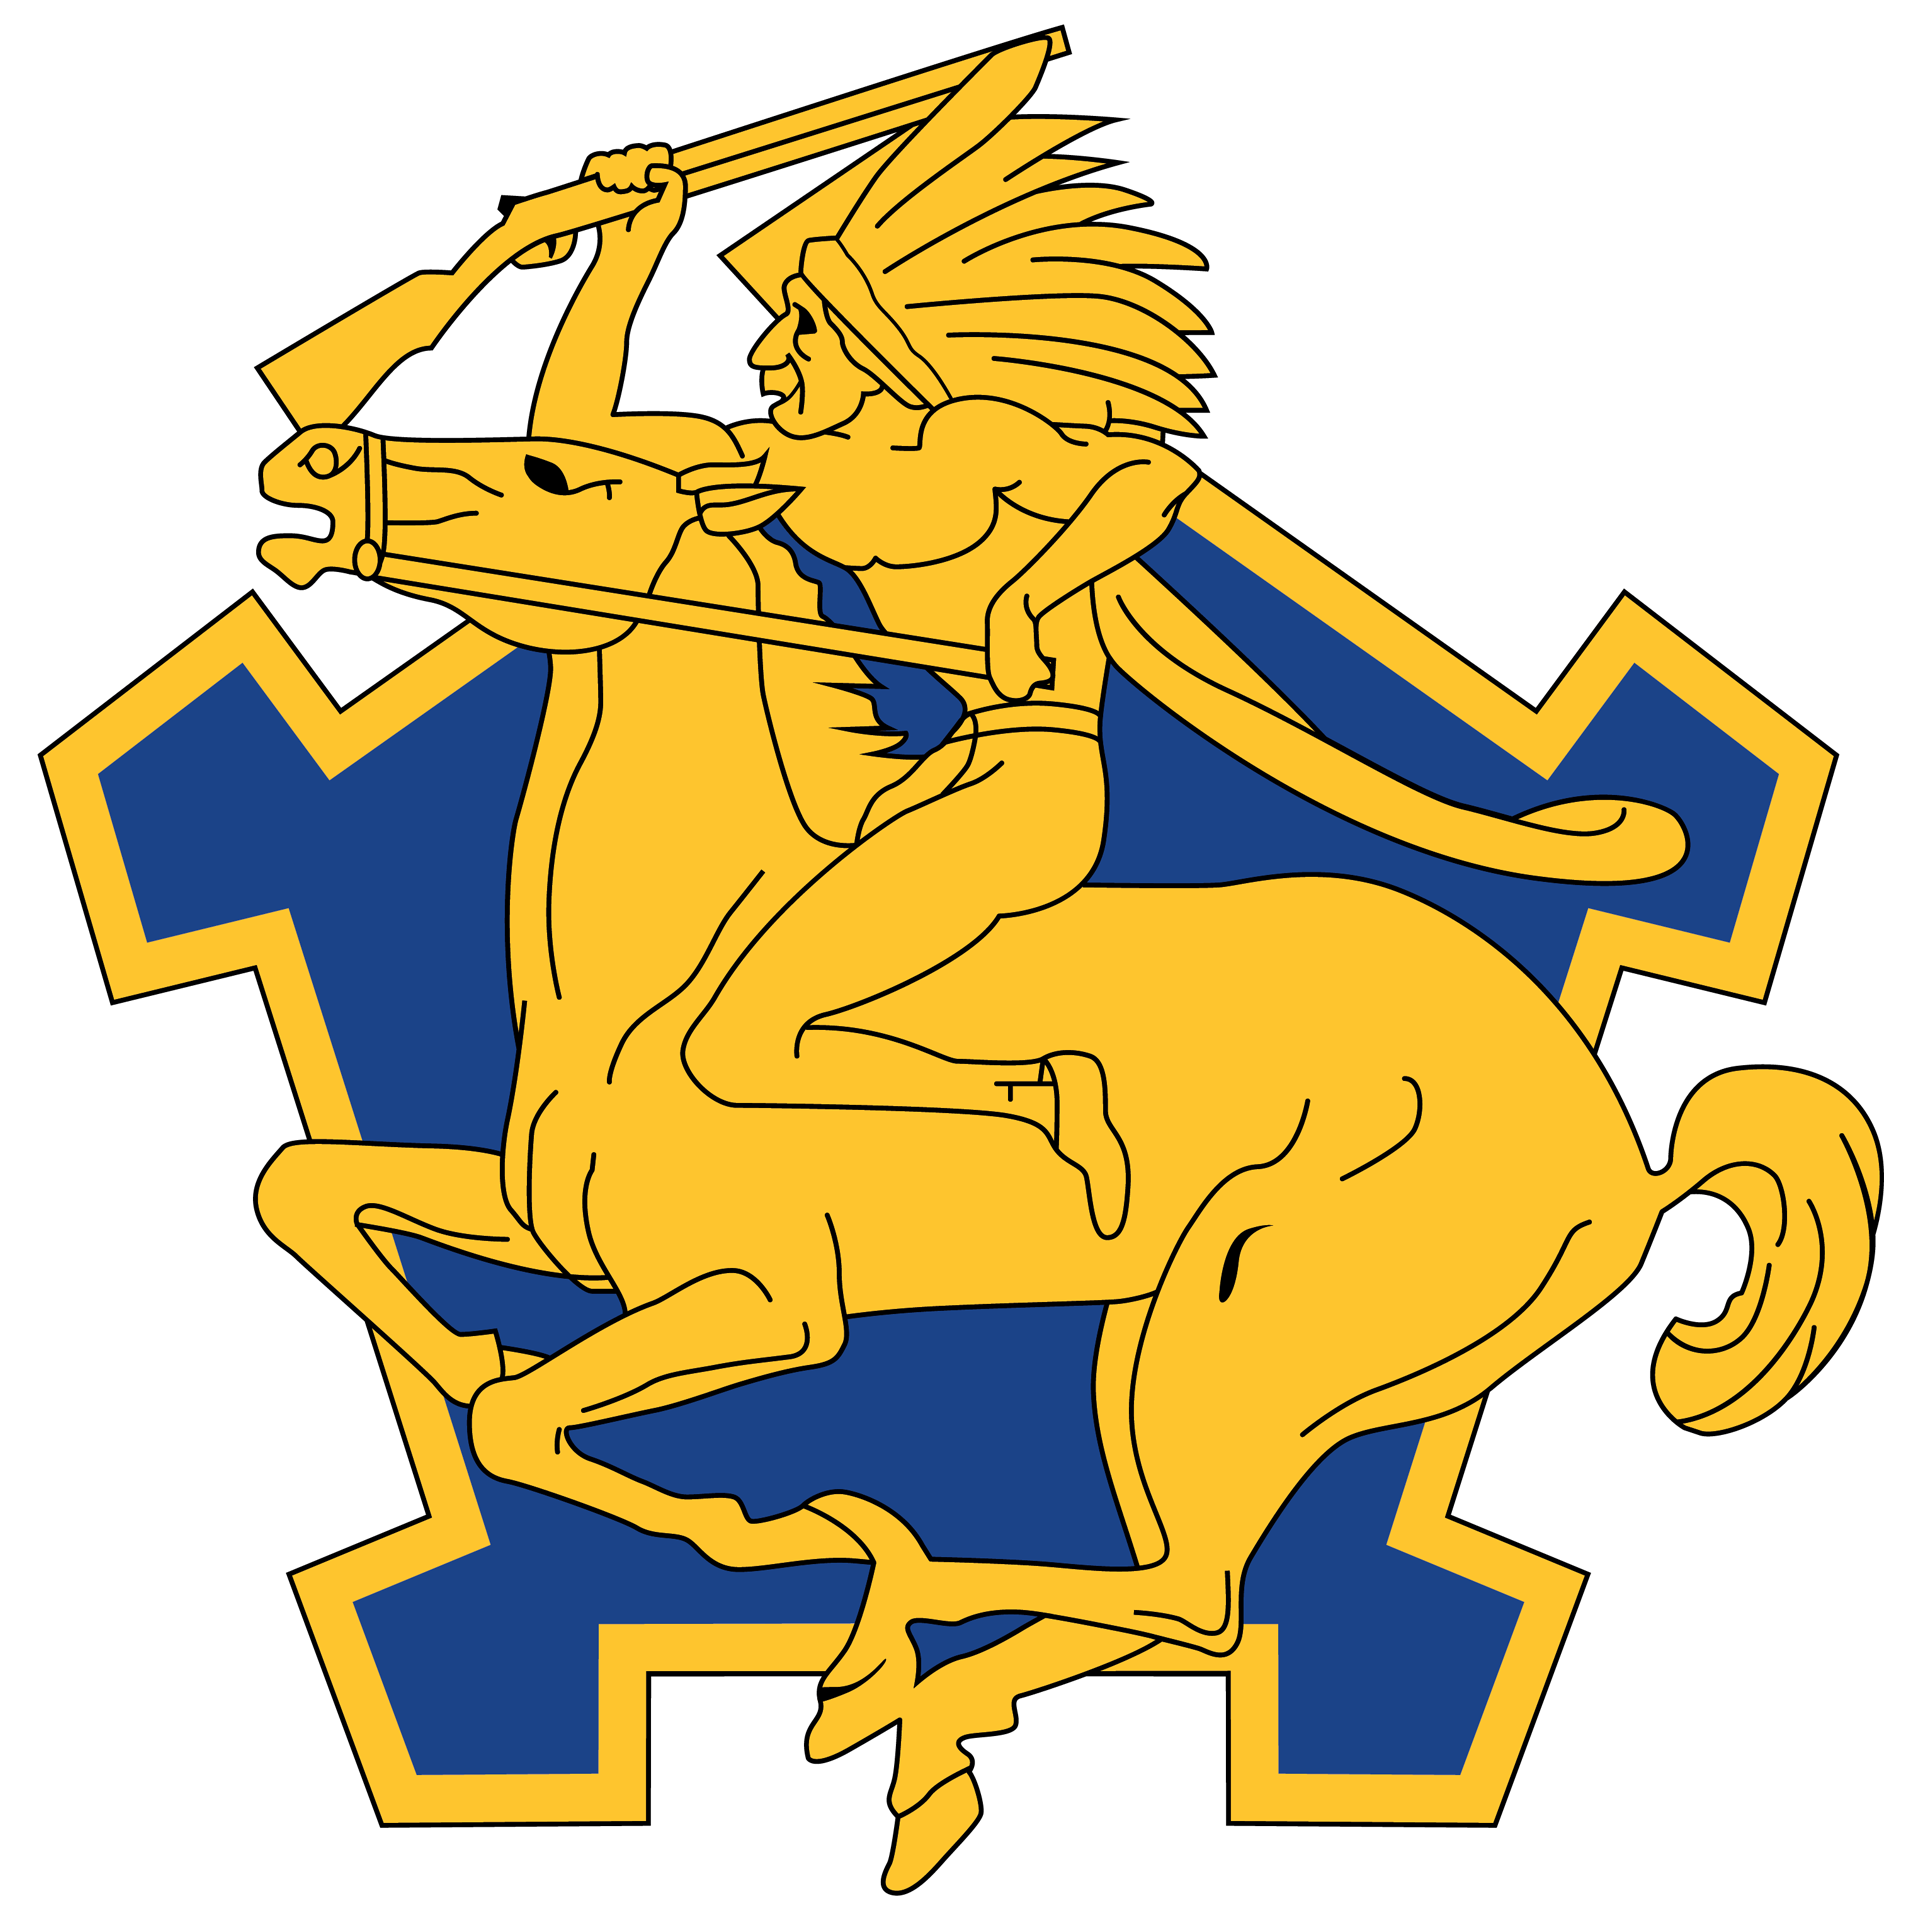 Vietnam War – Book of Honor – 1st Cavalry Division Association